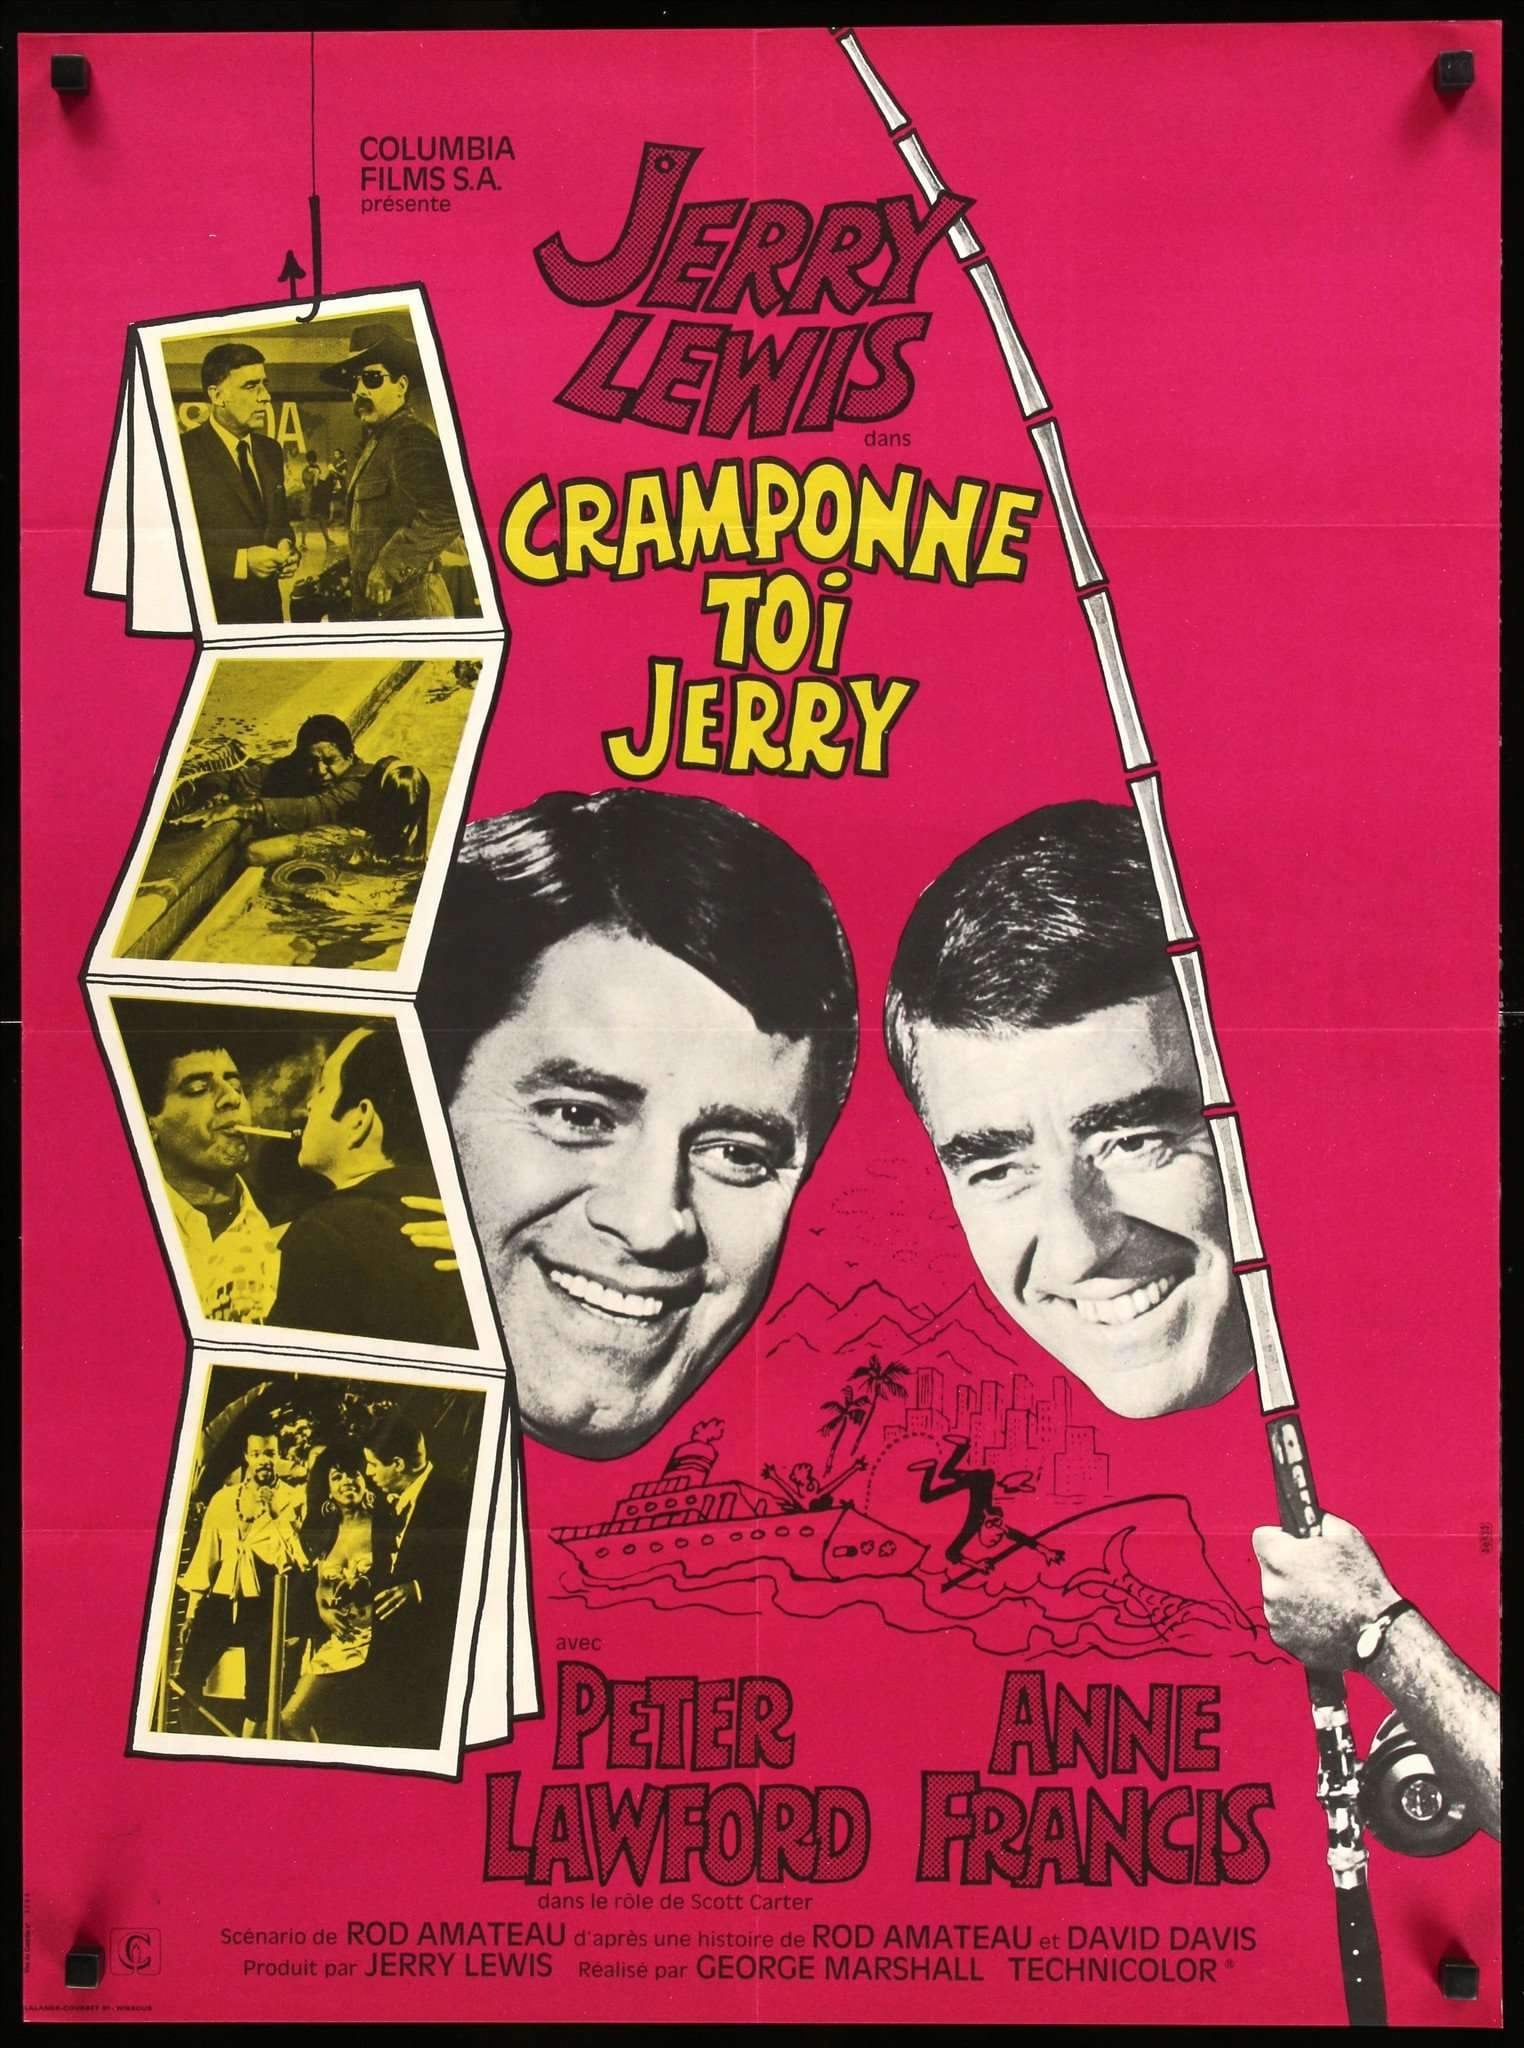 Hook, Line, and Sinker (1969) Original One-Sheet Movie Poster